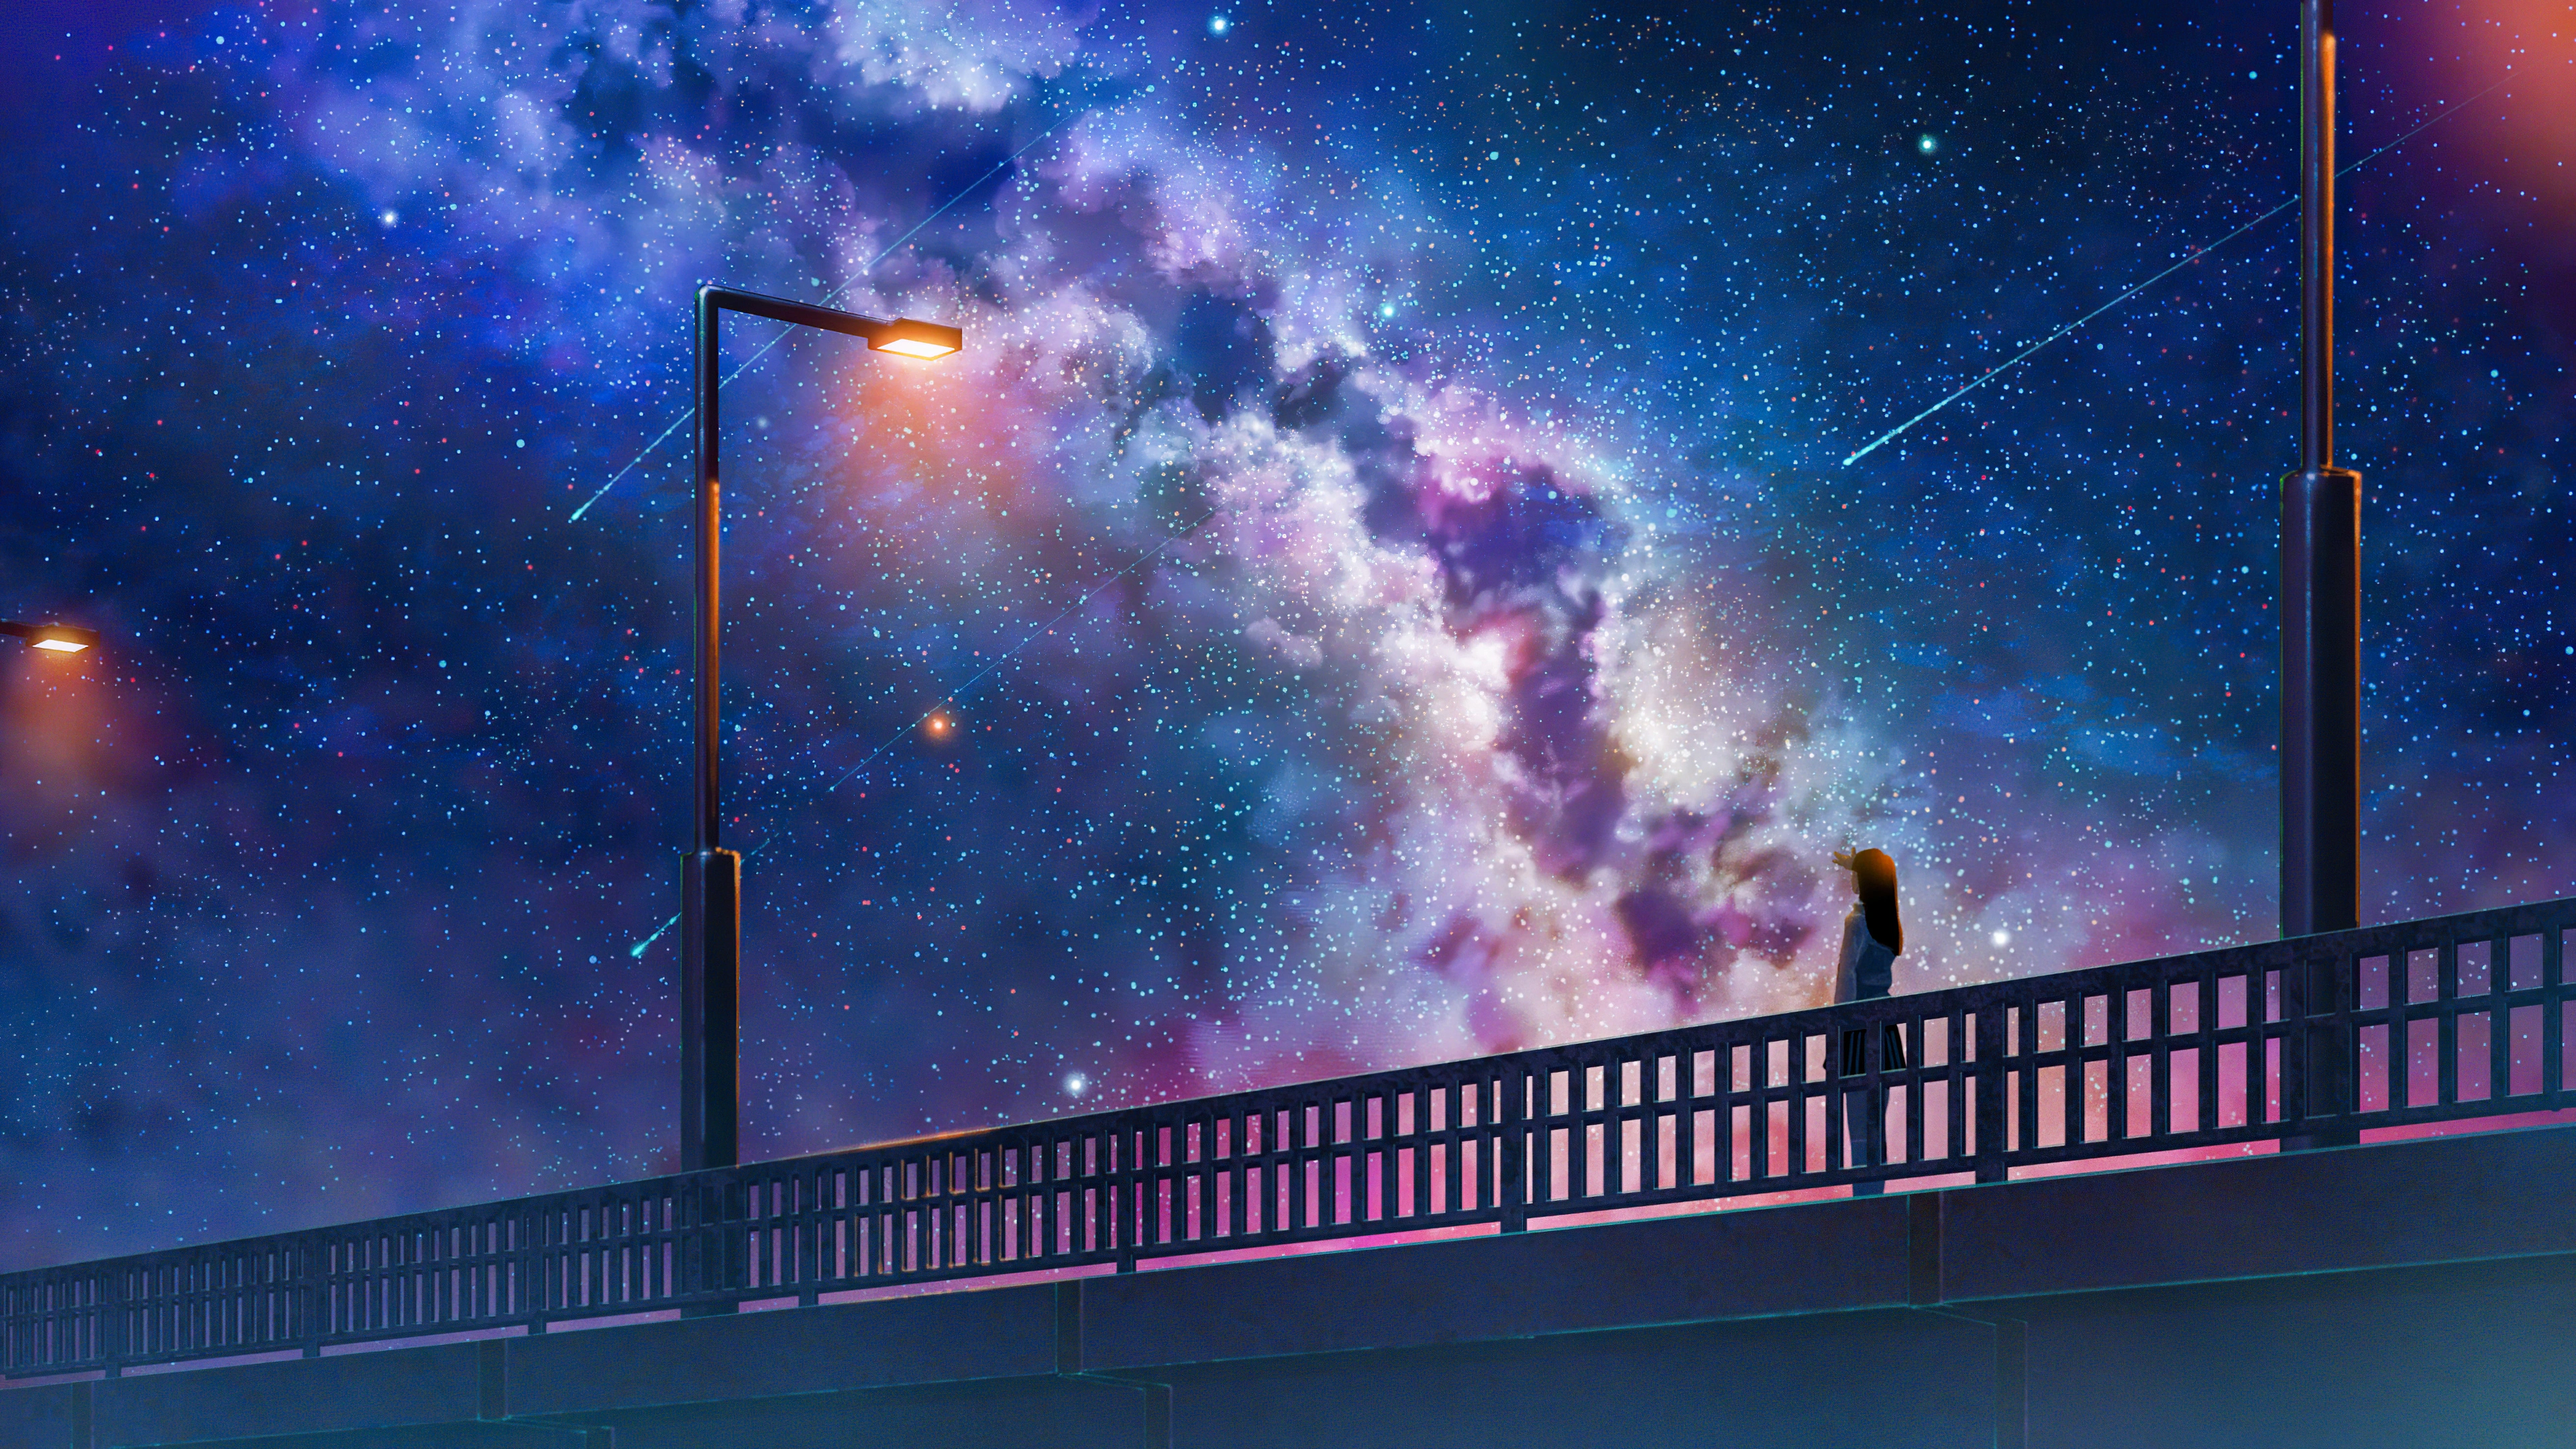 anime girl alone at bridge watching the galaxy full of stars 1696331329